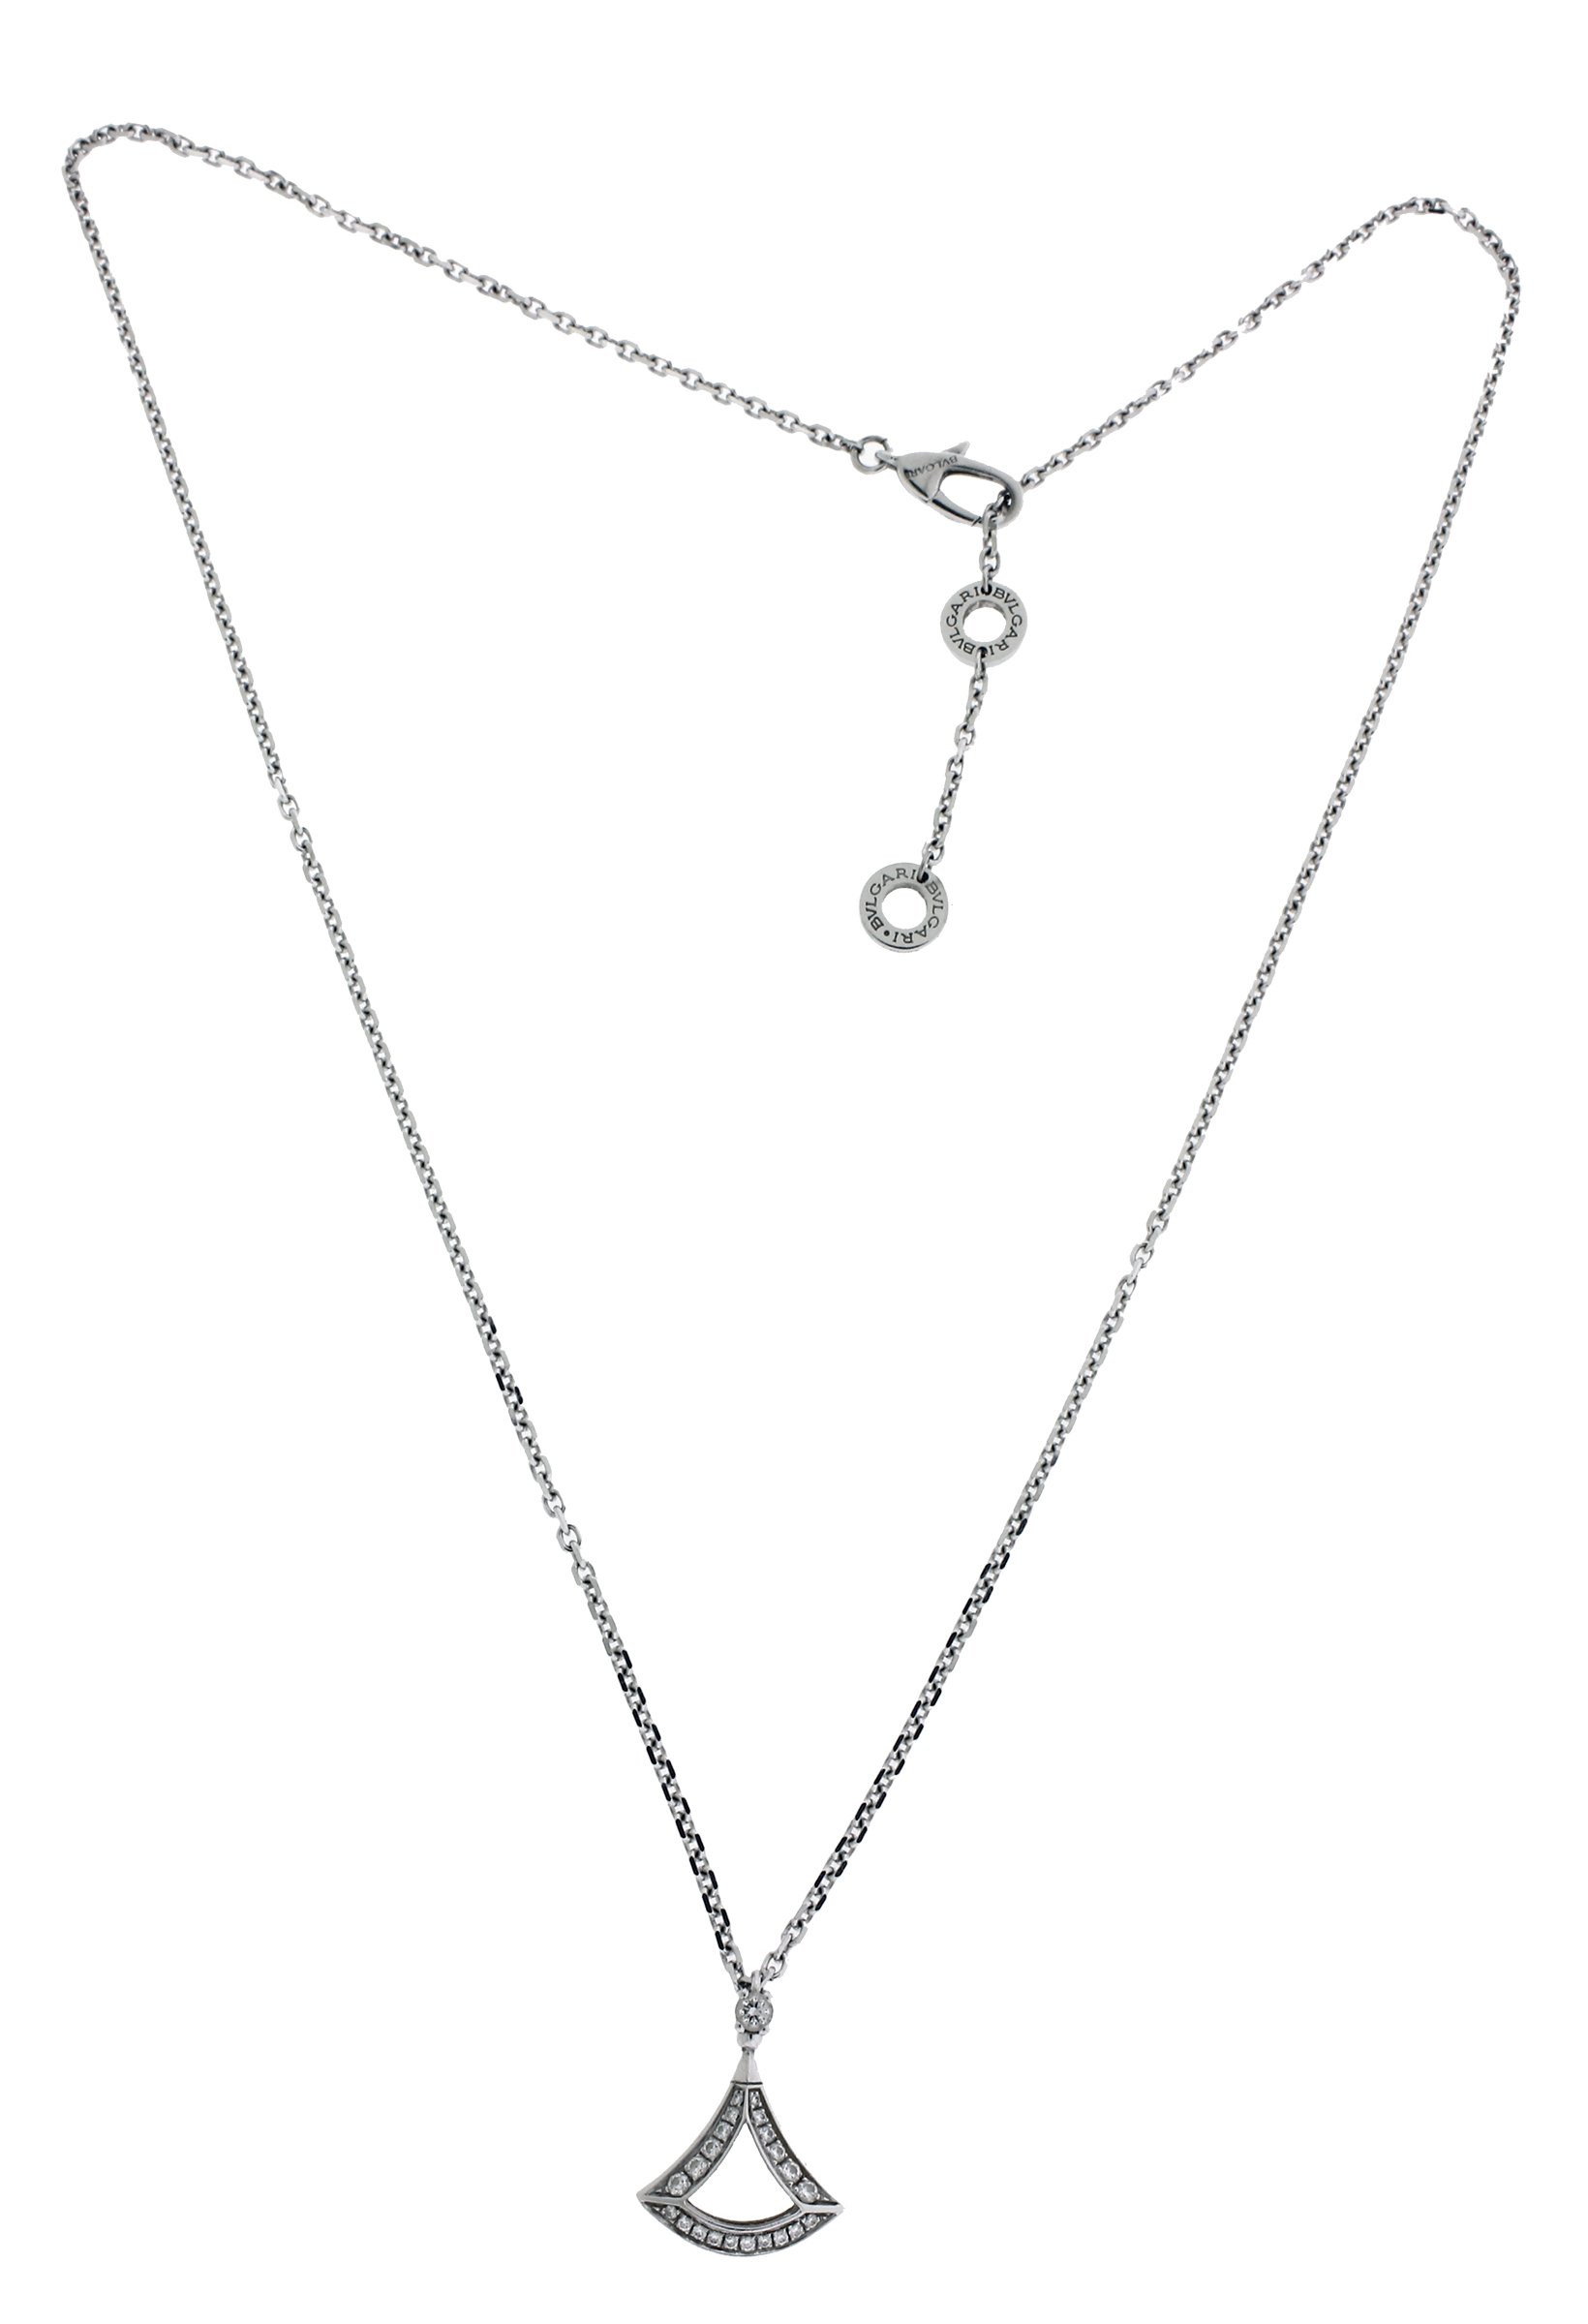 bvlgari necklace length